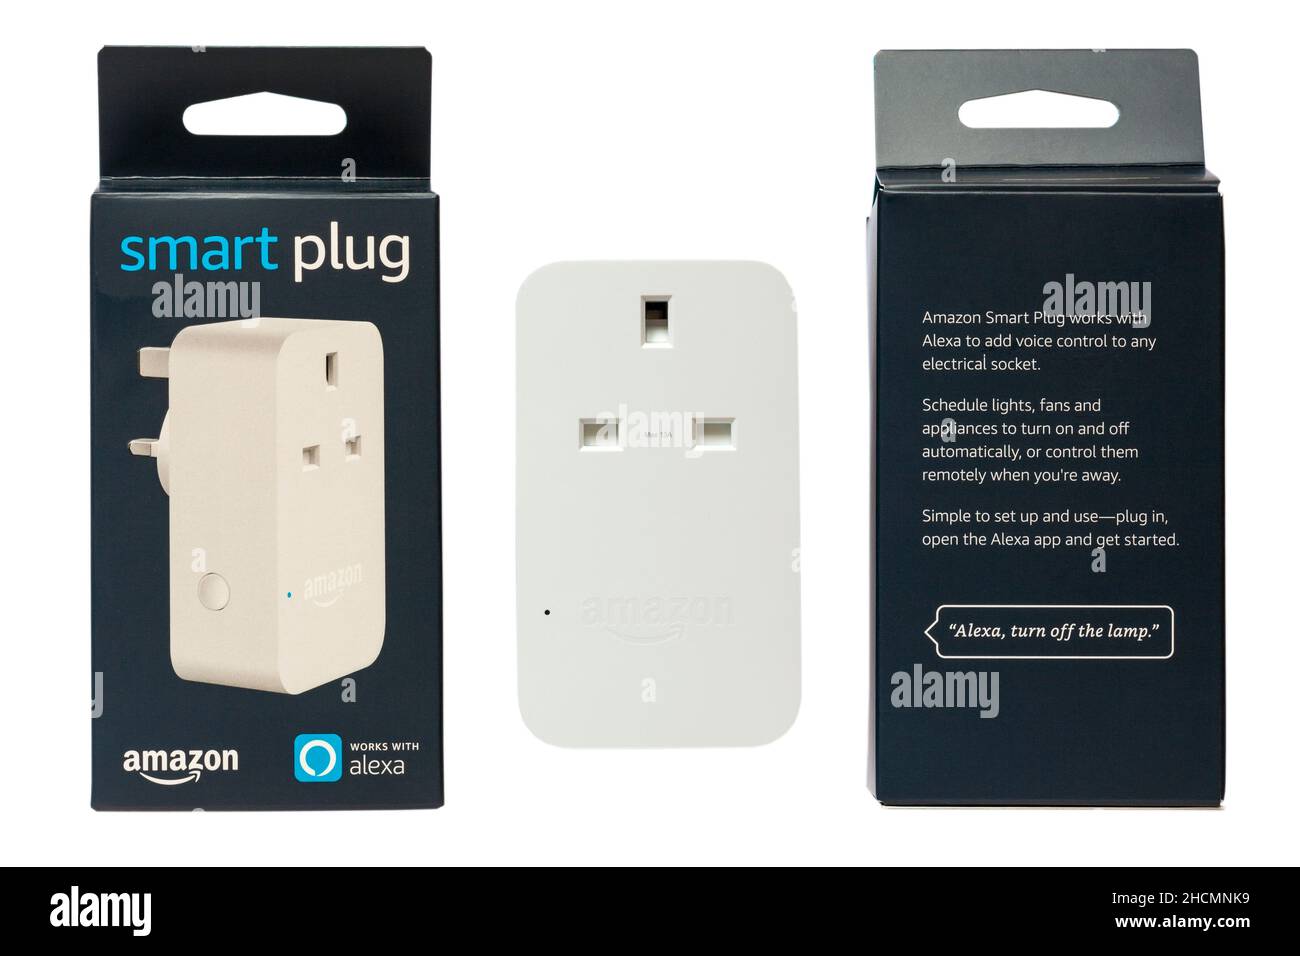 https://c8.alamy.com/comp/2HCMNK9/smart-plug-smartplug-works-with-alexa-amazon-removed-from-box-isolated-on-white-background-2HCMNK9.jpg